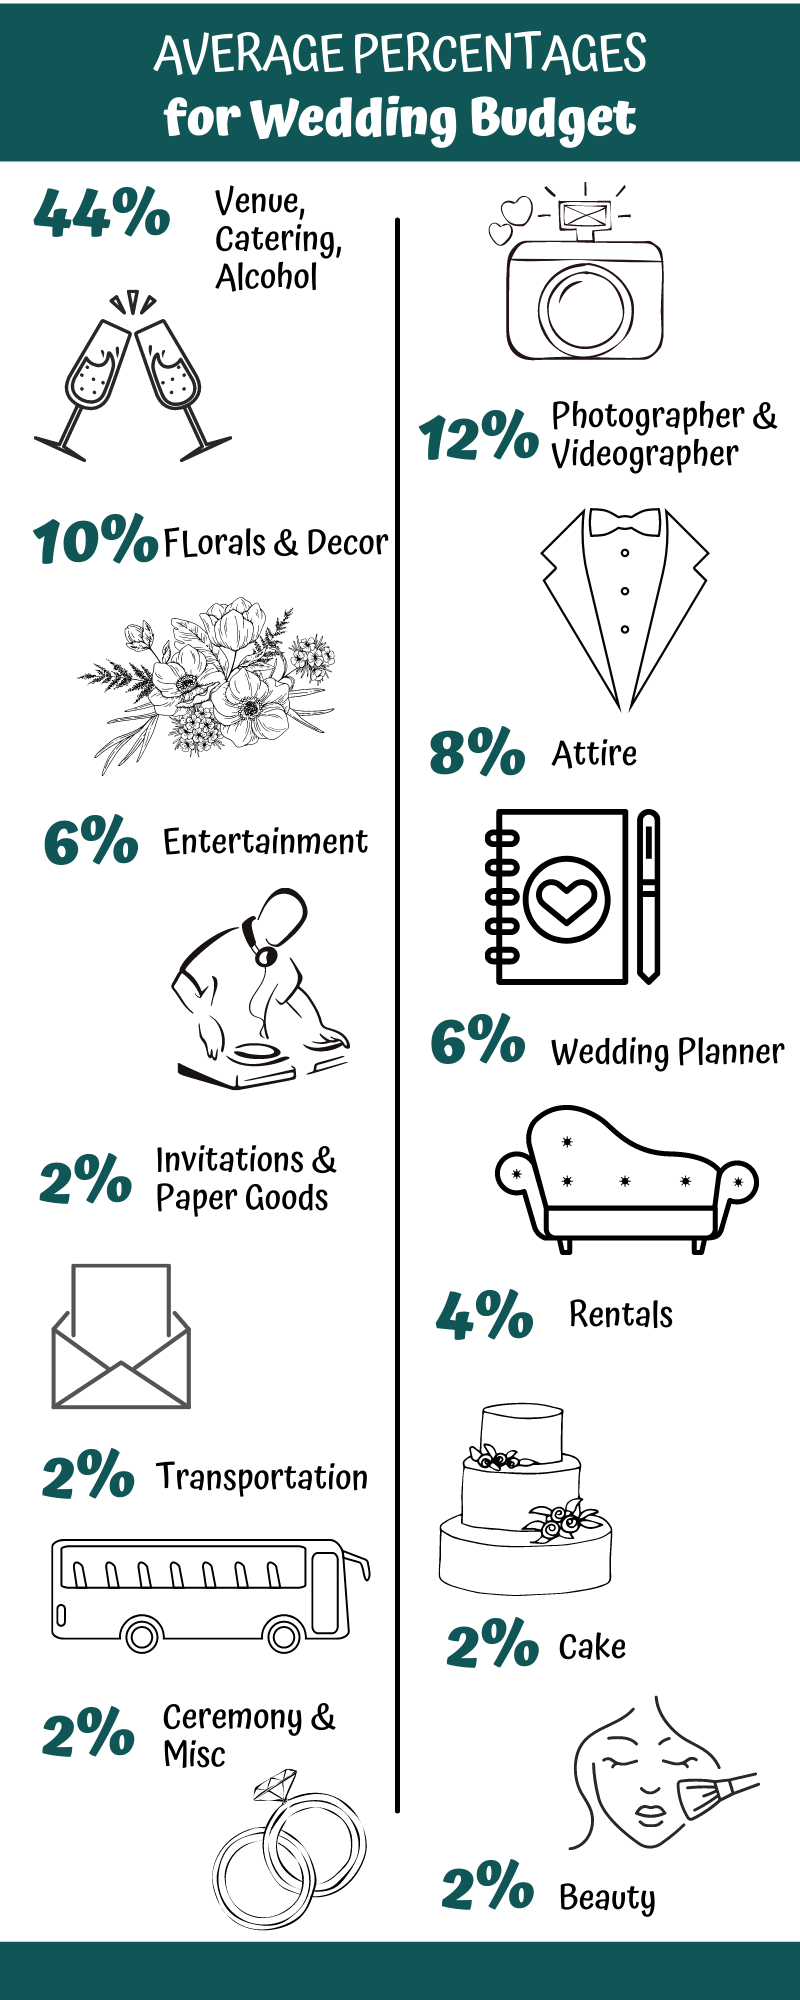 Vendor Percentages for Wedding Budget